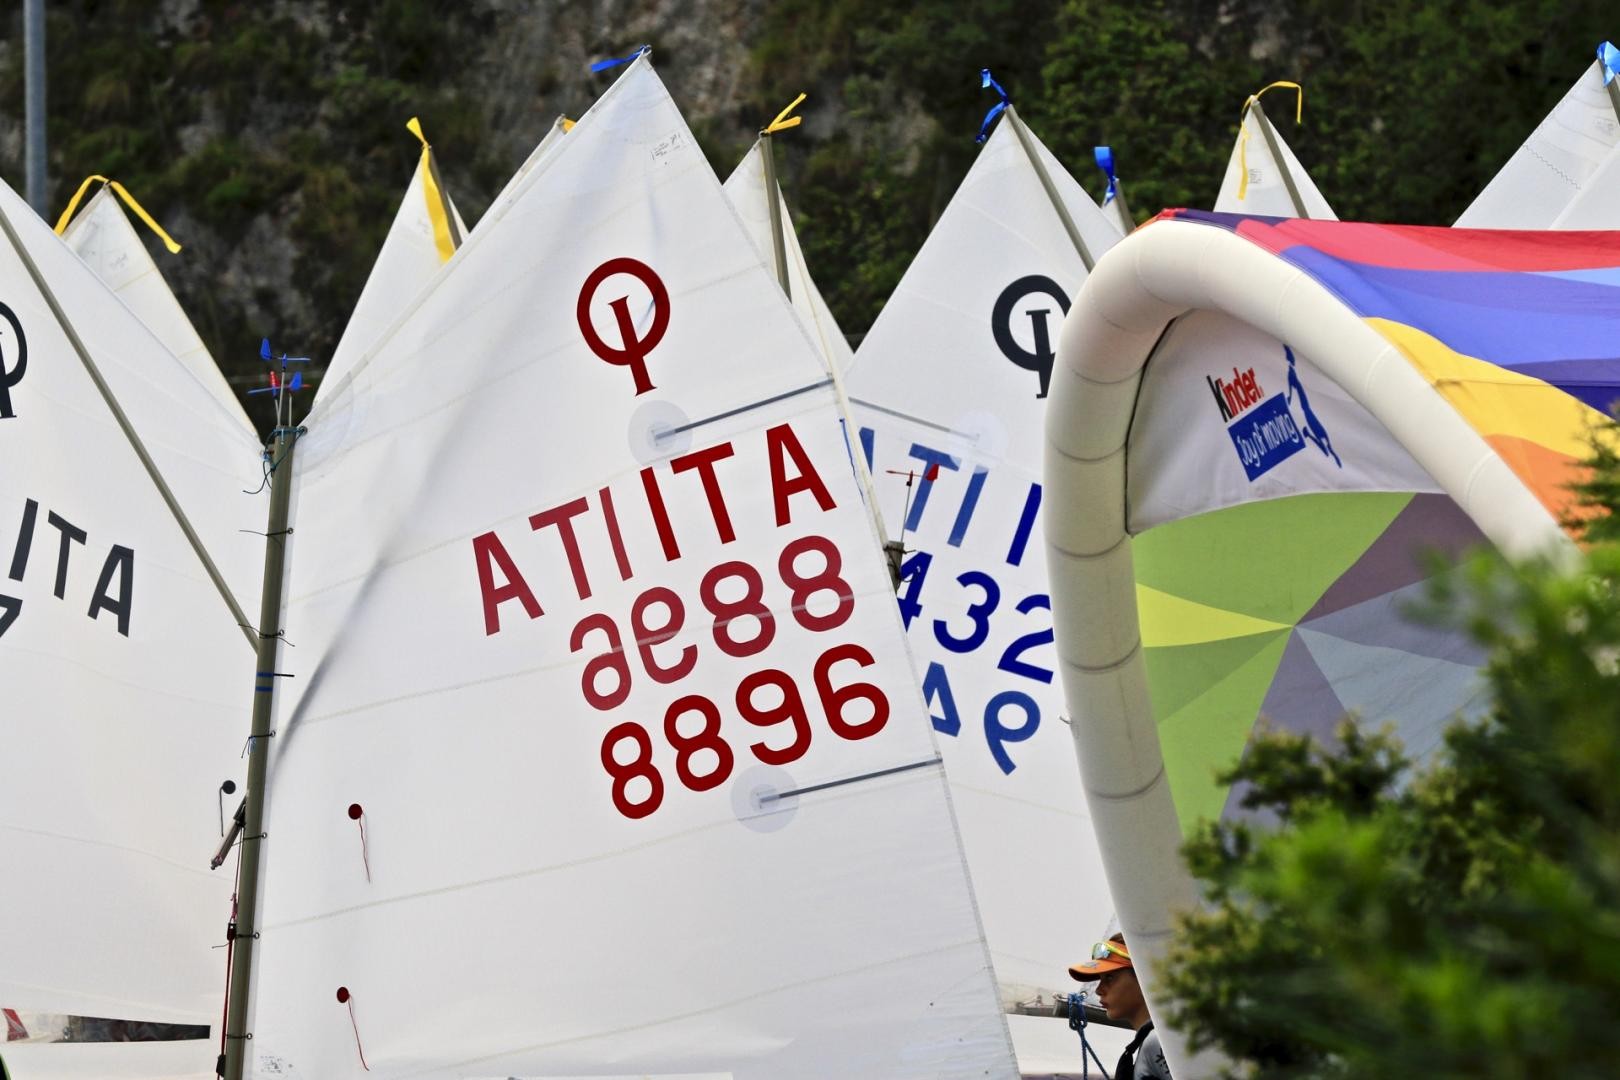 Italiani Giovanili: optimist a Malcesine e windsurf a Torbole, day 3